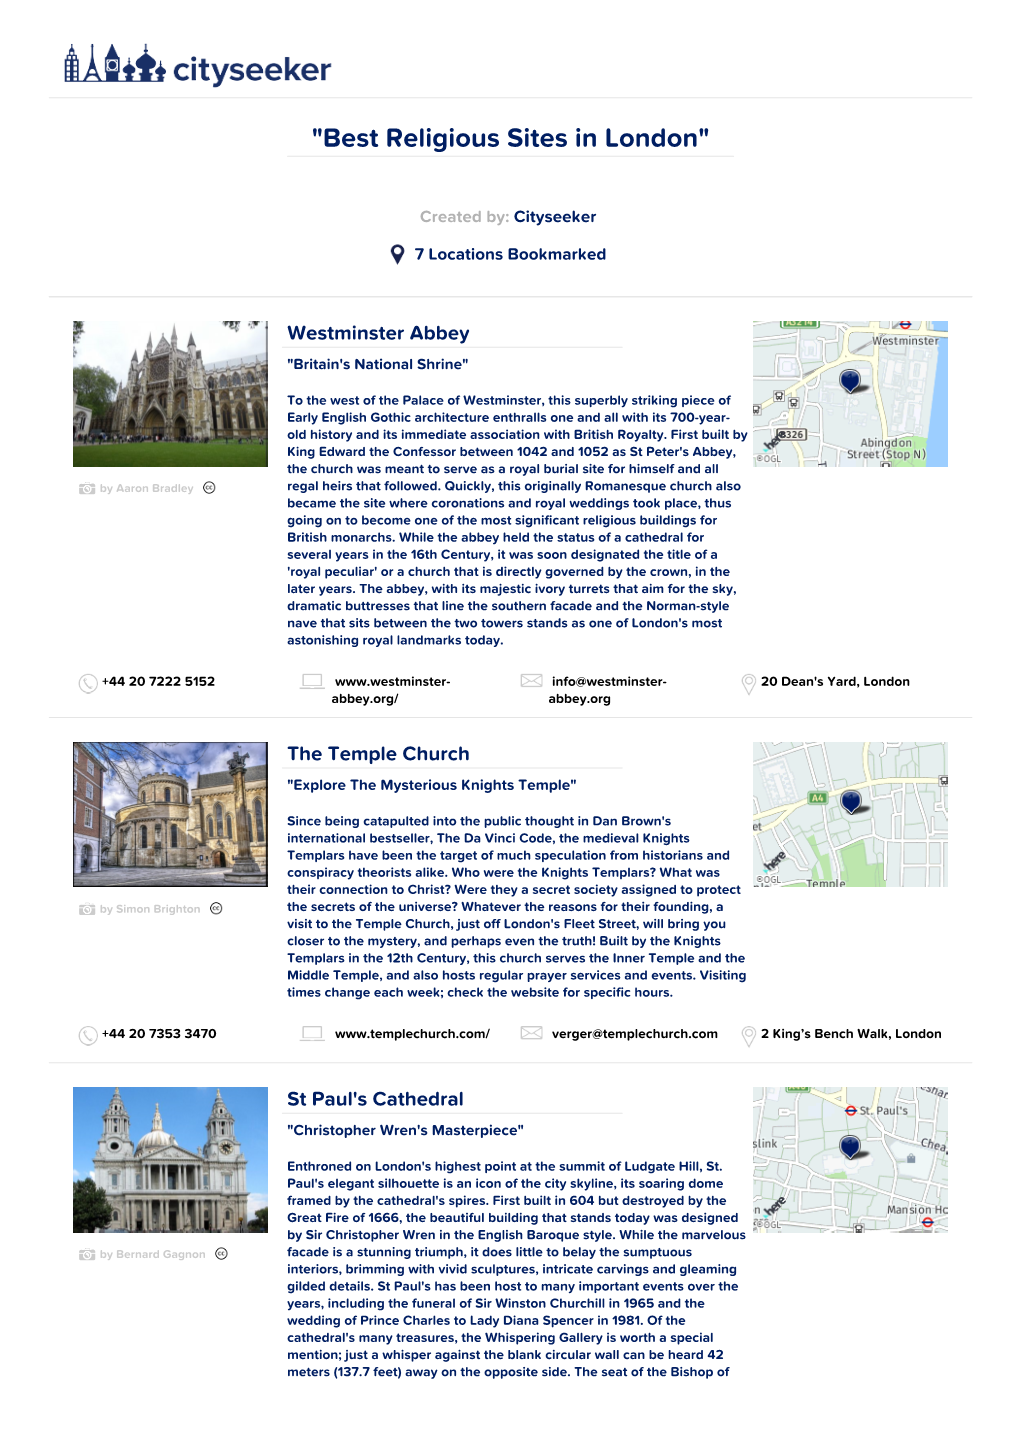 Best Religious Sites in London"